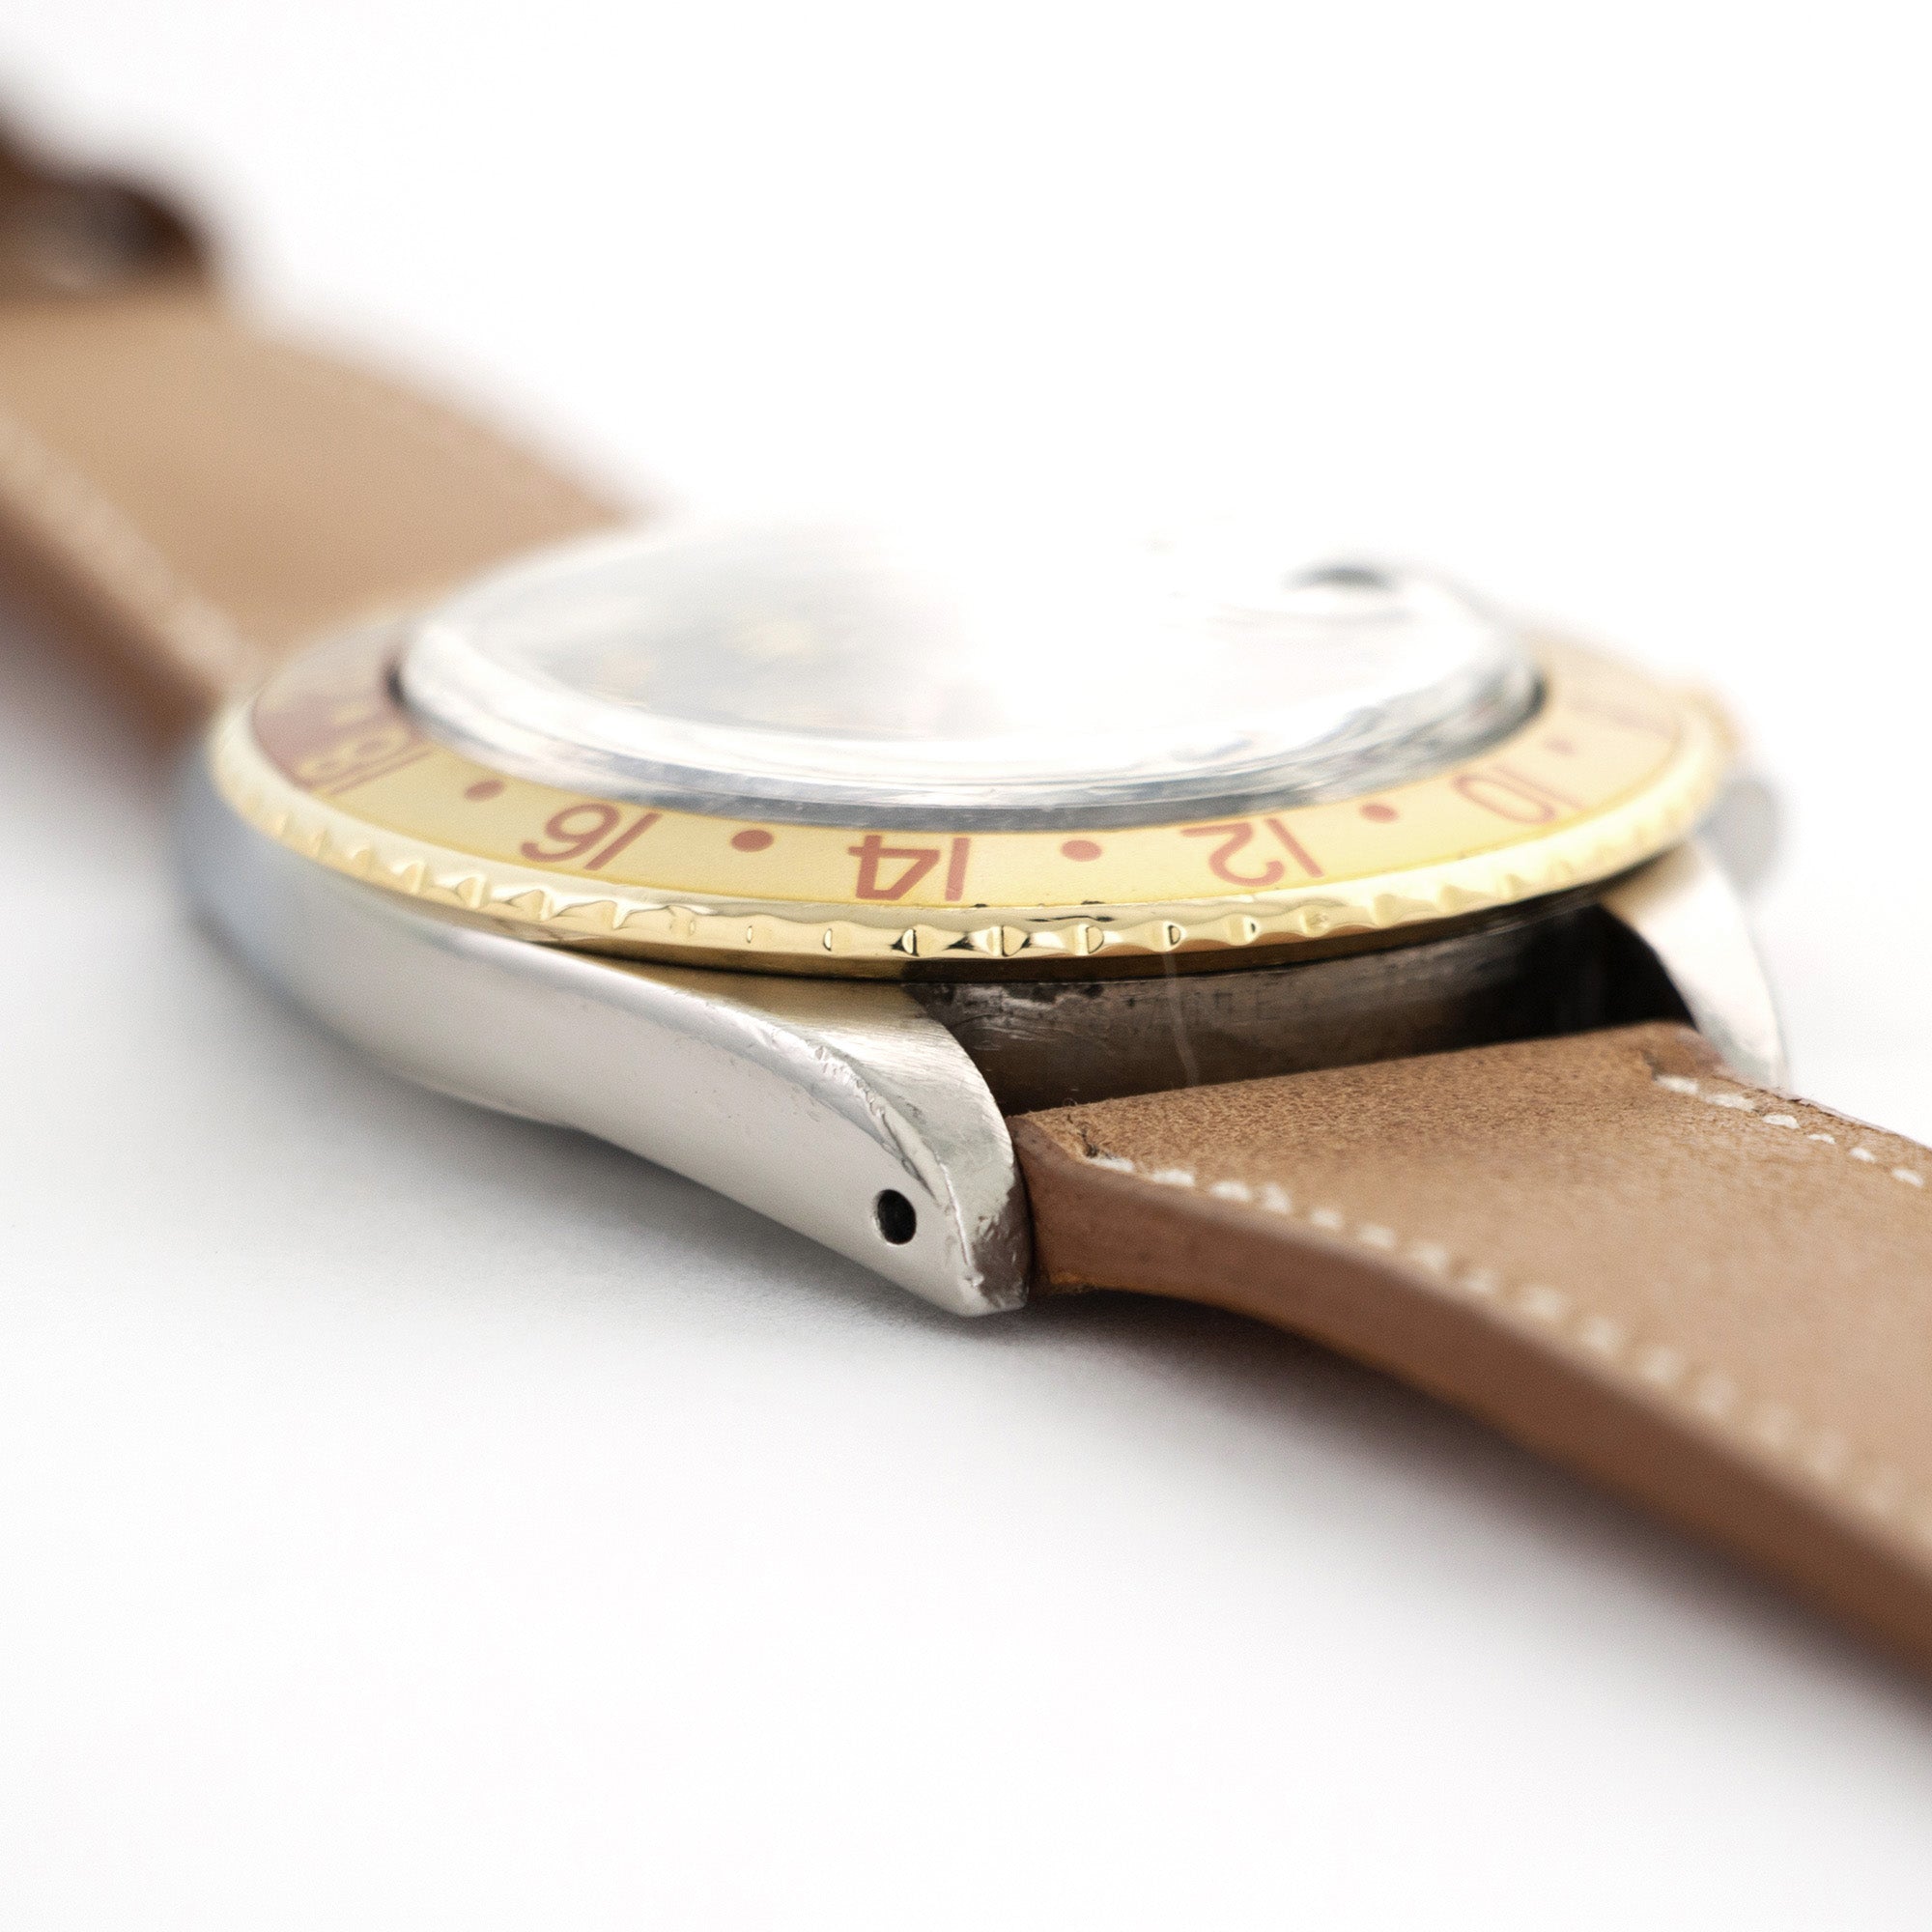 Rolex - Rolex Two-Tone GMT-Master Watch Ref. 16753 - The Keystone Watches